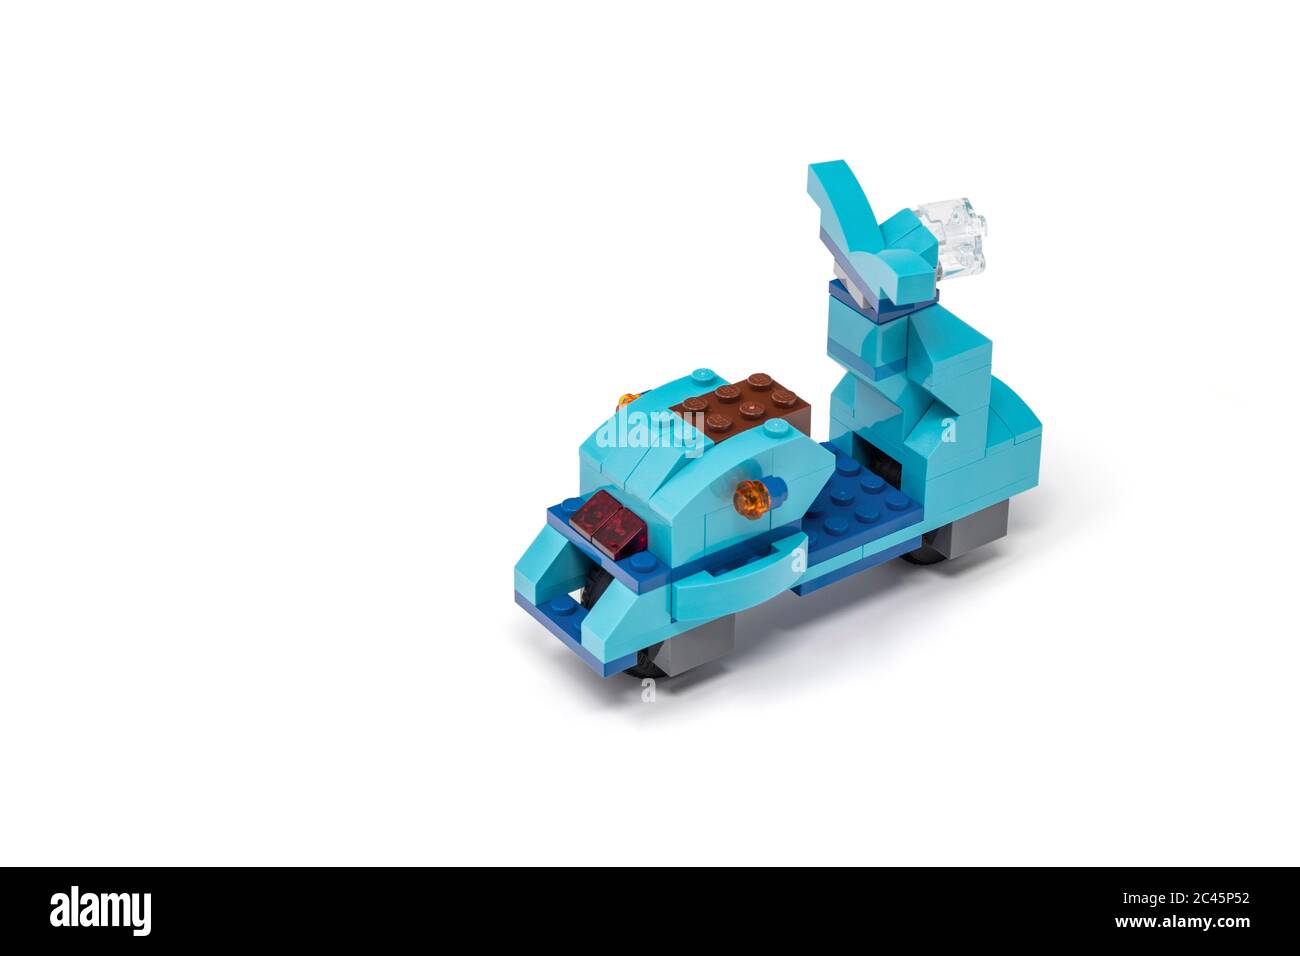 Mayo 15, 2019 - Roma, Italia - Lego scooter hecho de bloques de  construcción. Vespa italiana, motocicleta, color azul. Medios de transporte  económicos, fáciles e inteligentes Fotografía de stock - Alamy